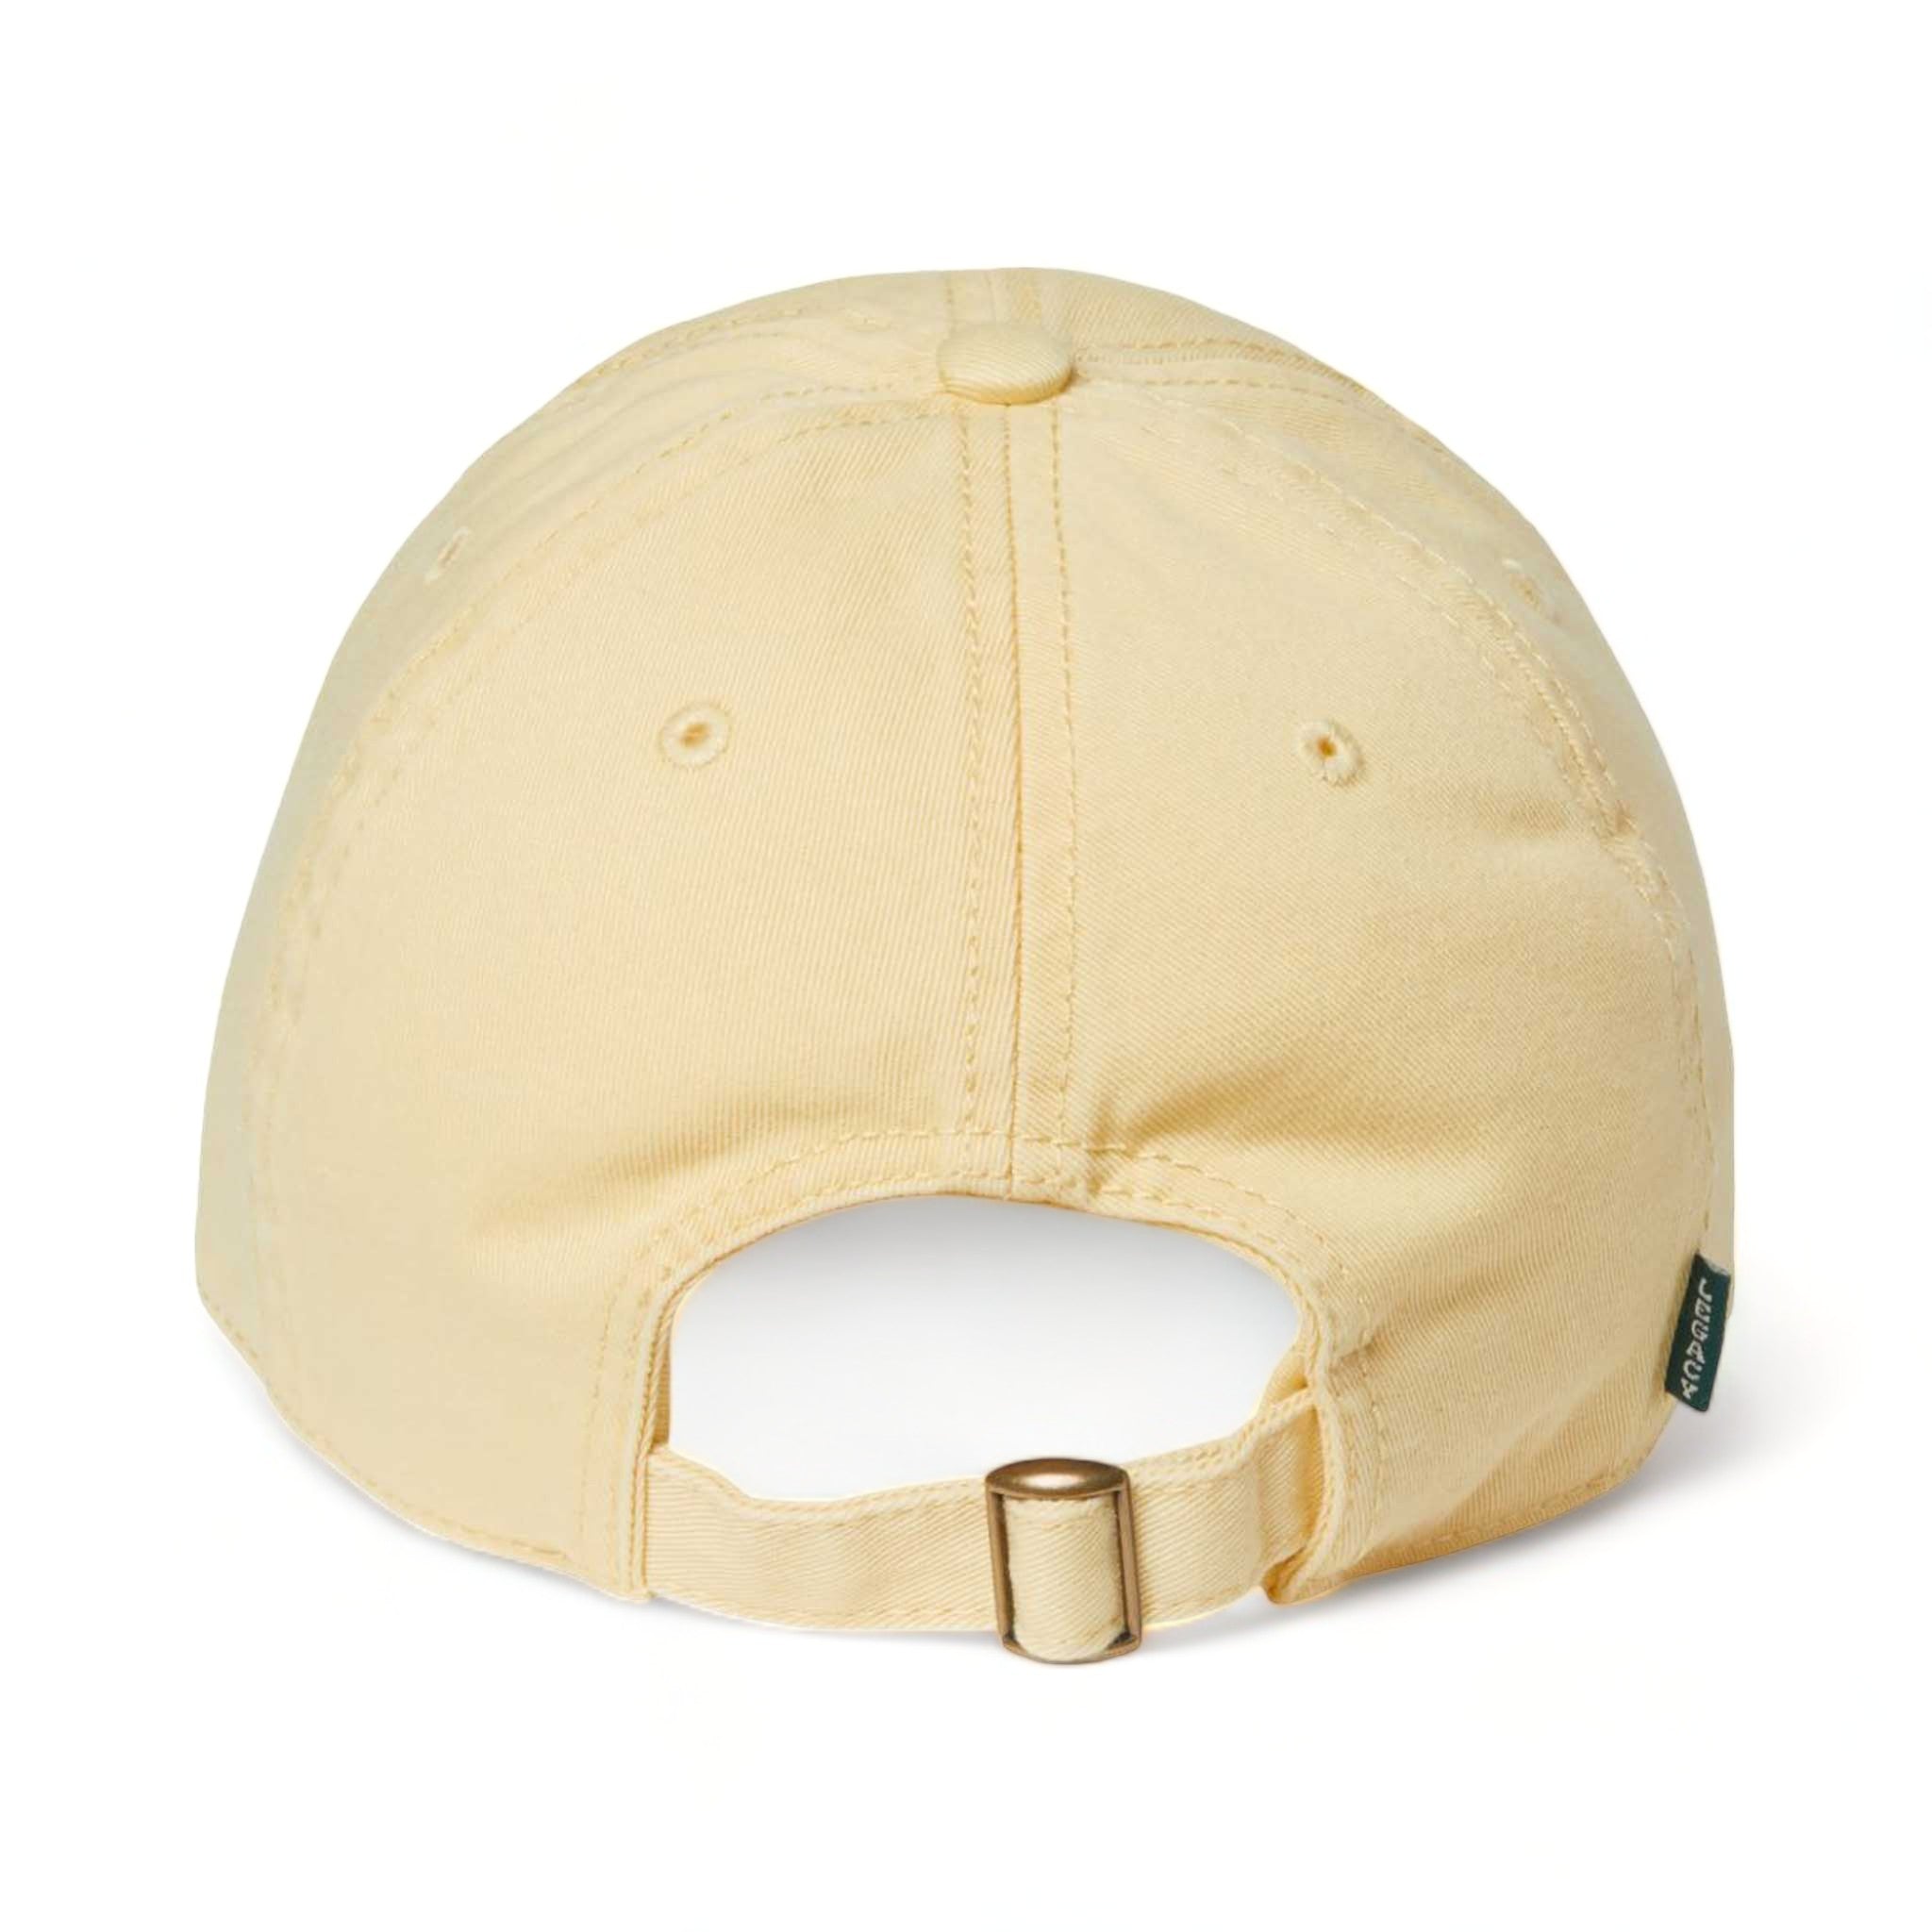 Back view of LEGACY EZA custom hat in lemon